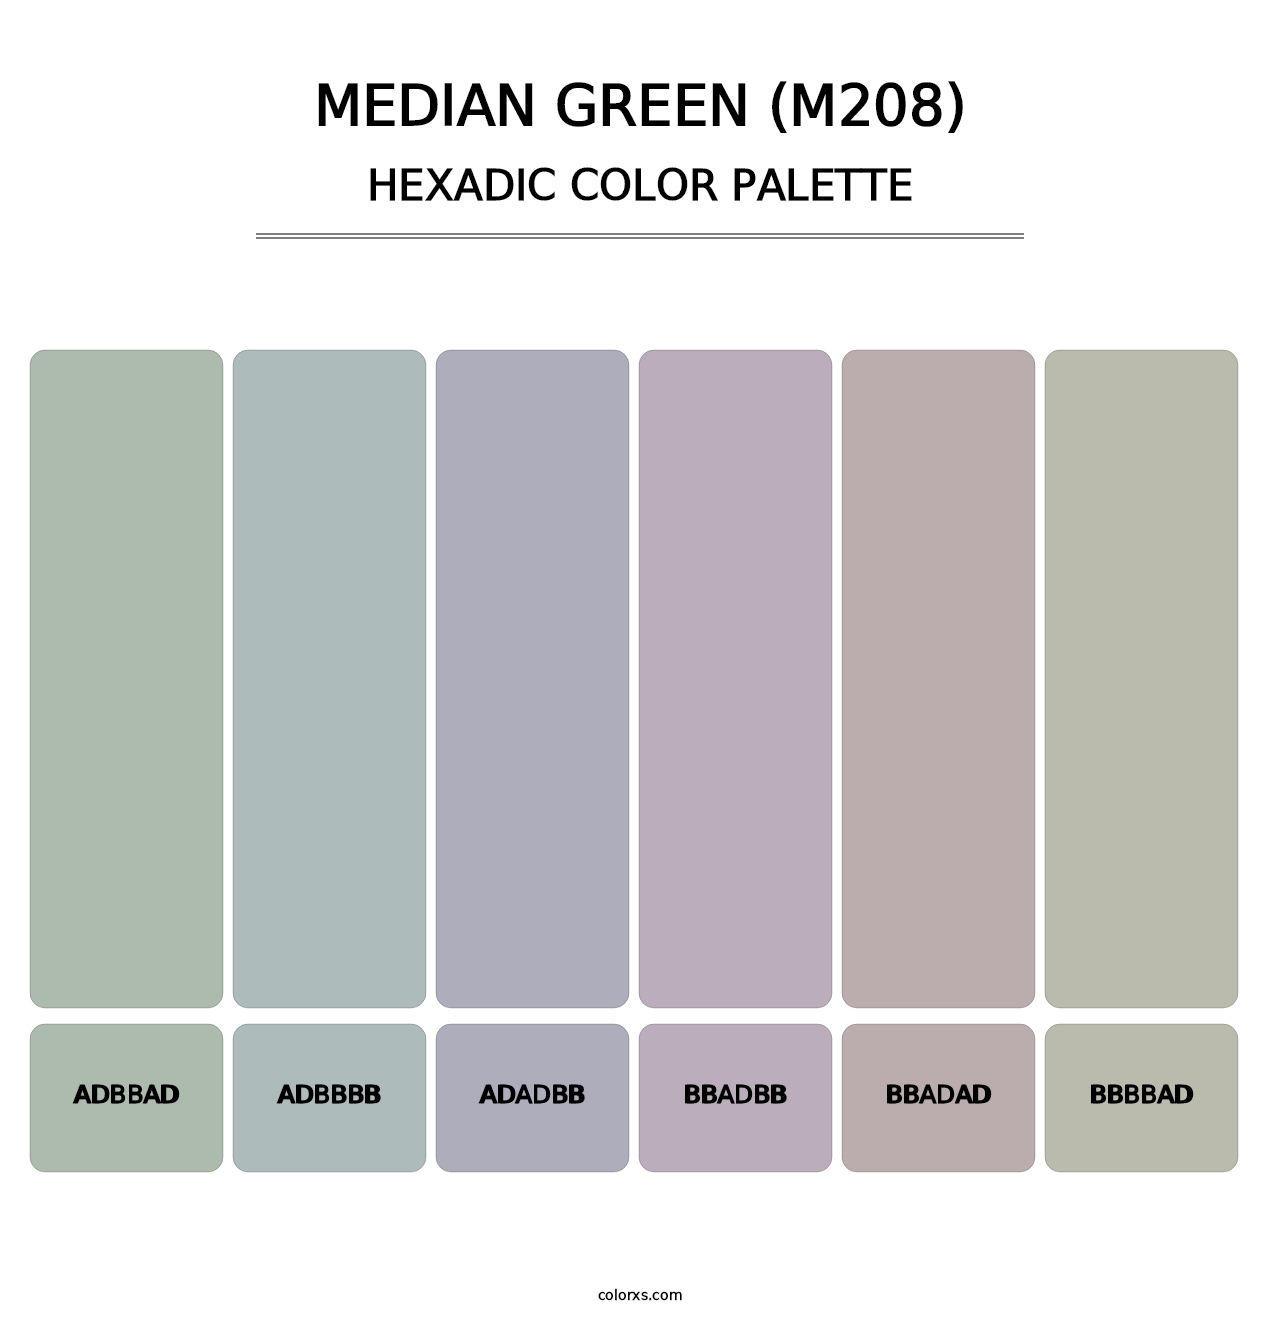 Median Green (M208) - Hexadic Color Palette